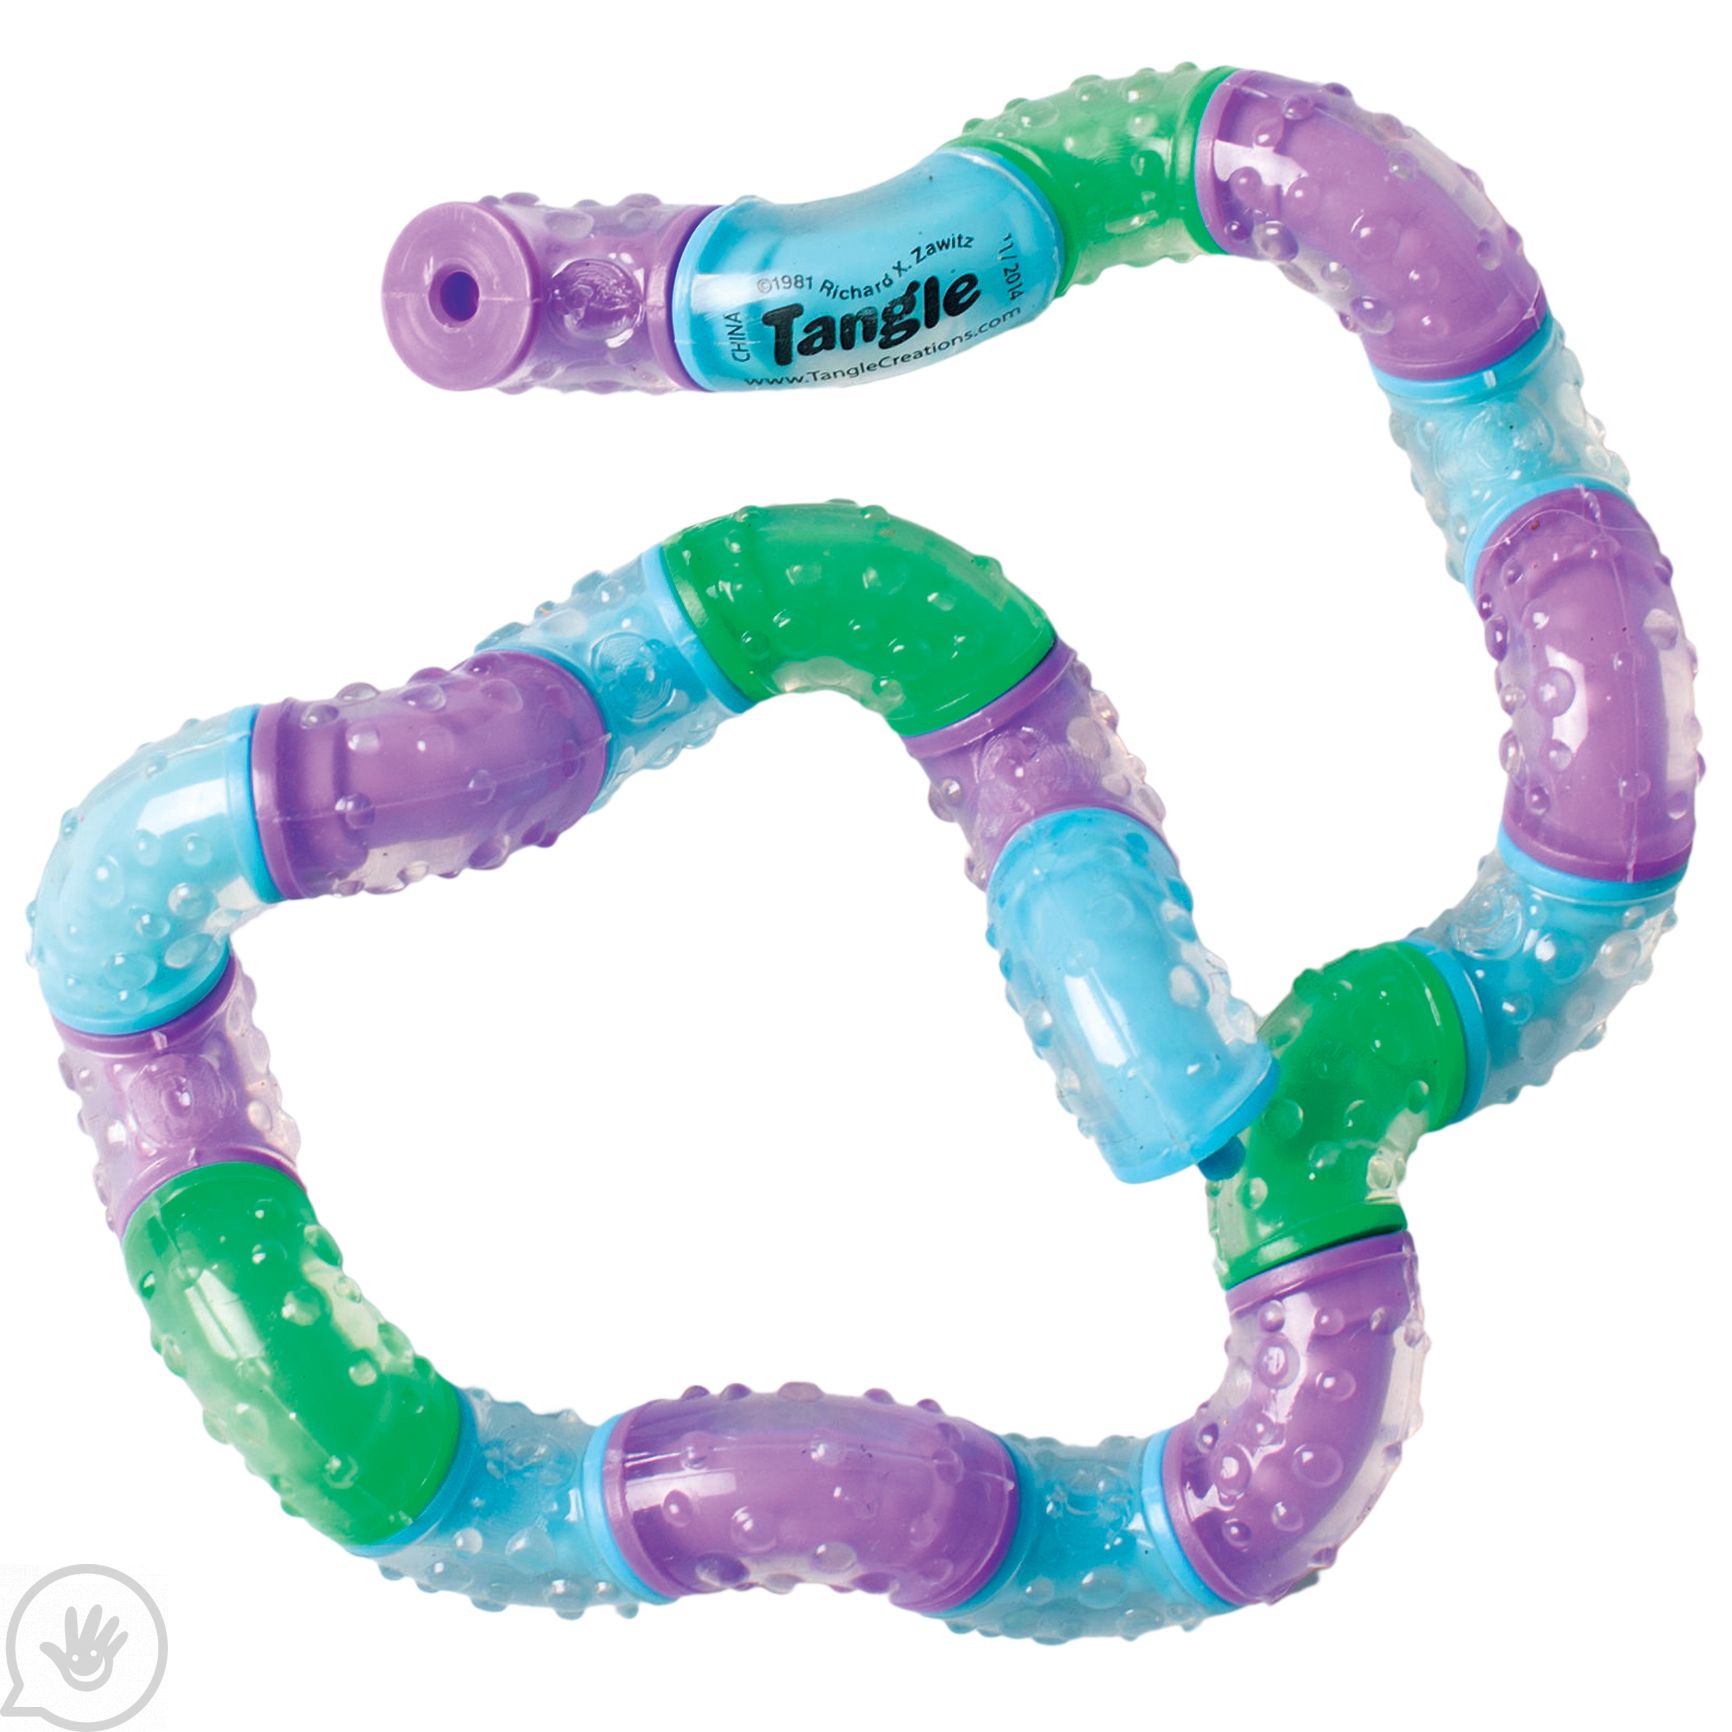 Tangle Charms Series Jr Fidget Toy SEN Stress Autism ADHD Anxiety  tink  n stink